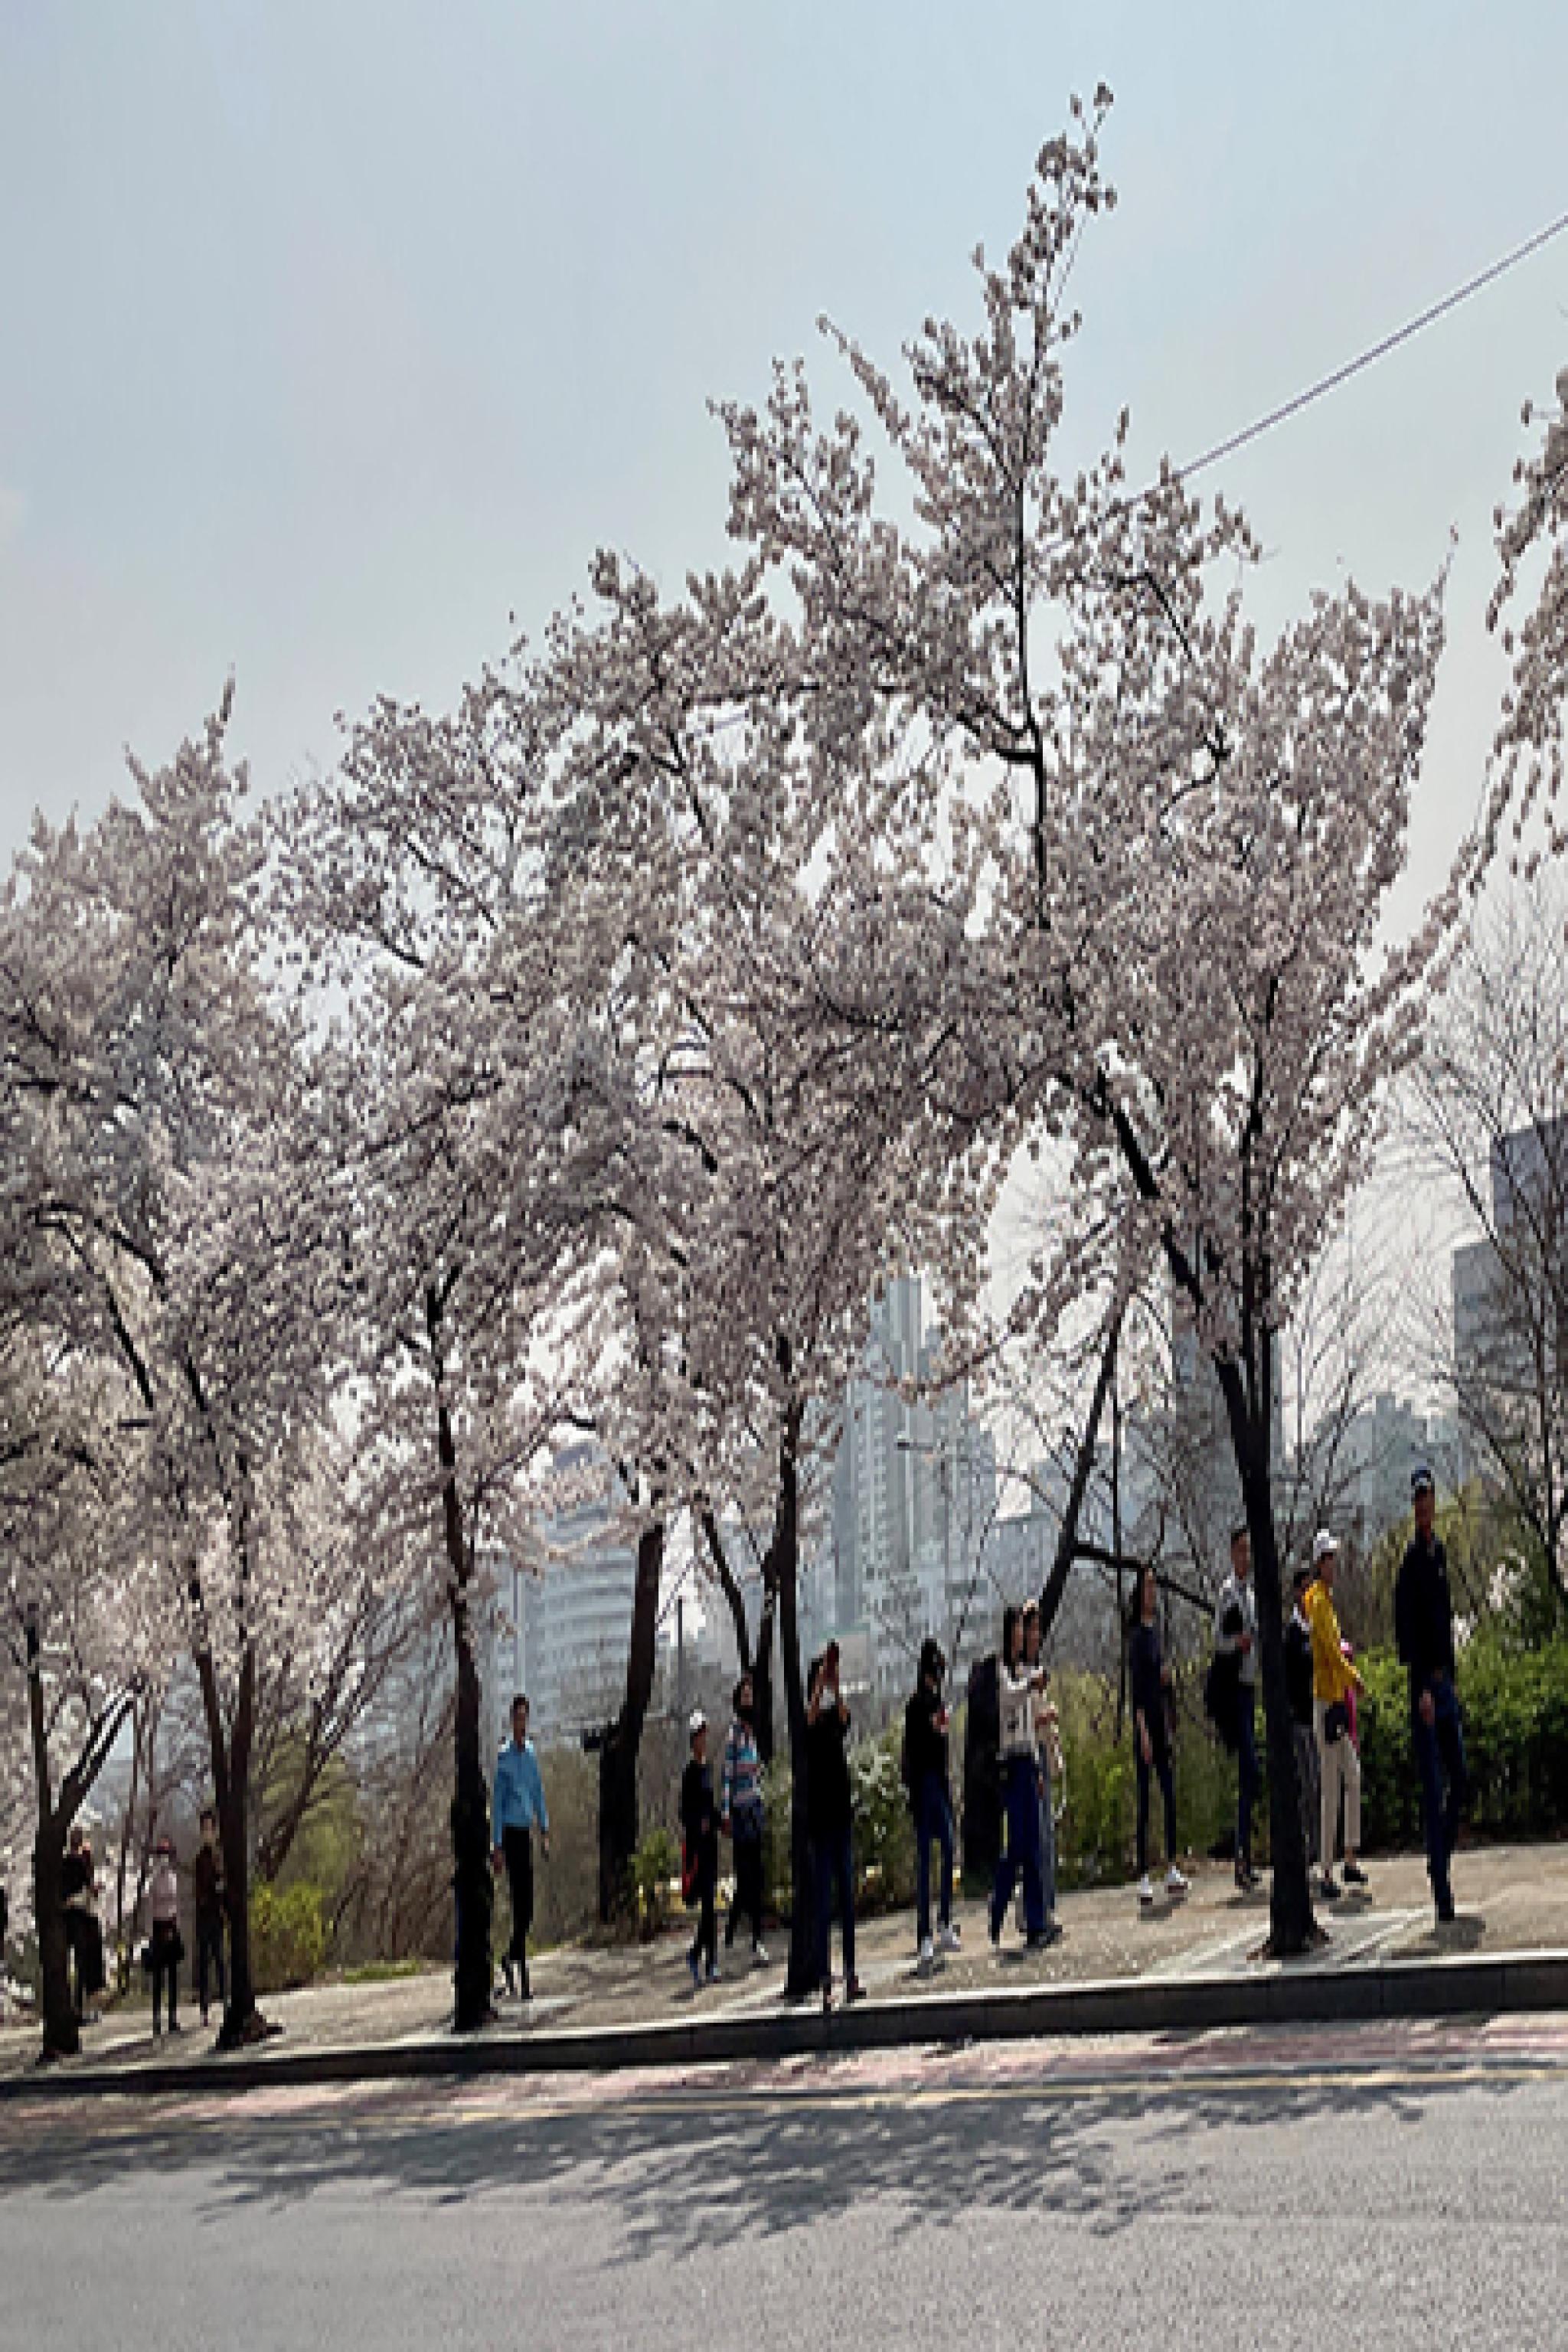 Cherry Blossoms in Korea